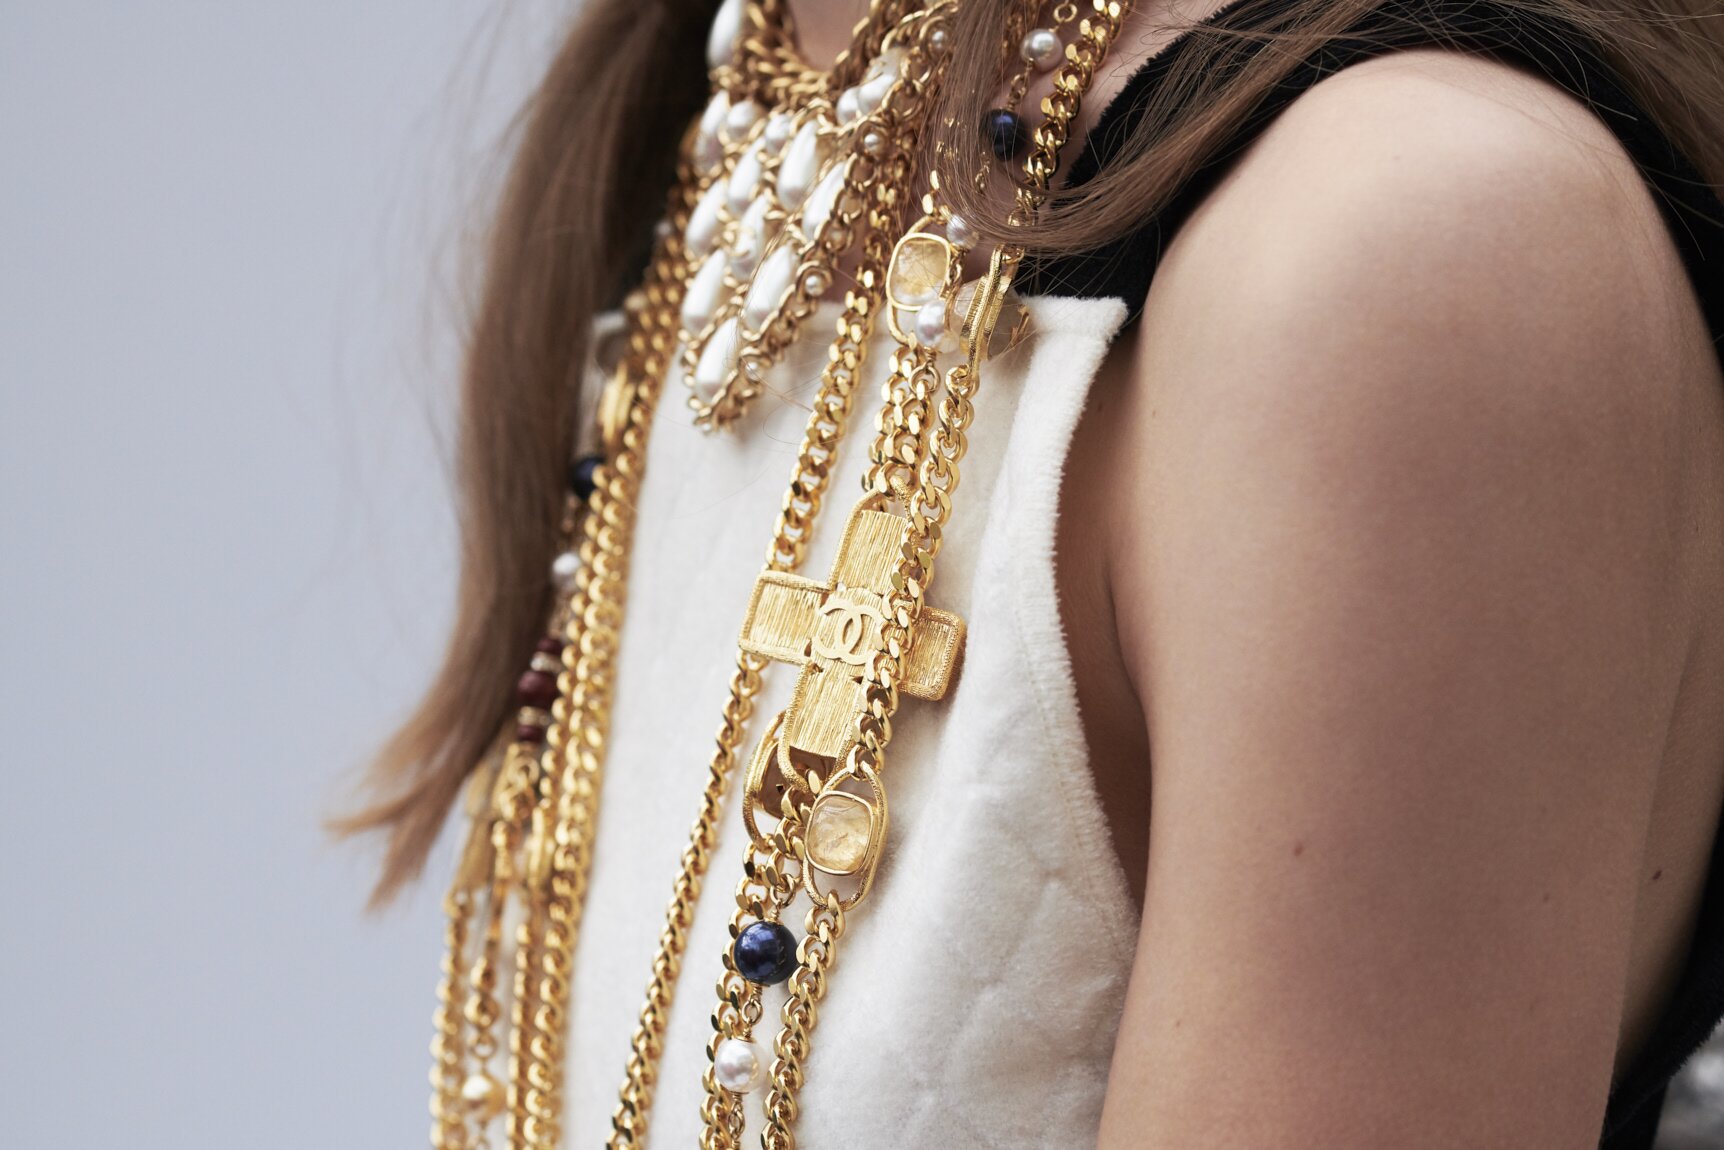 Chanel Womenswear Necklace Detail 2020-21